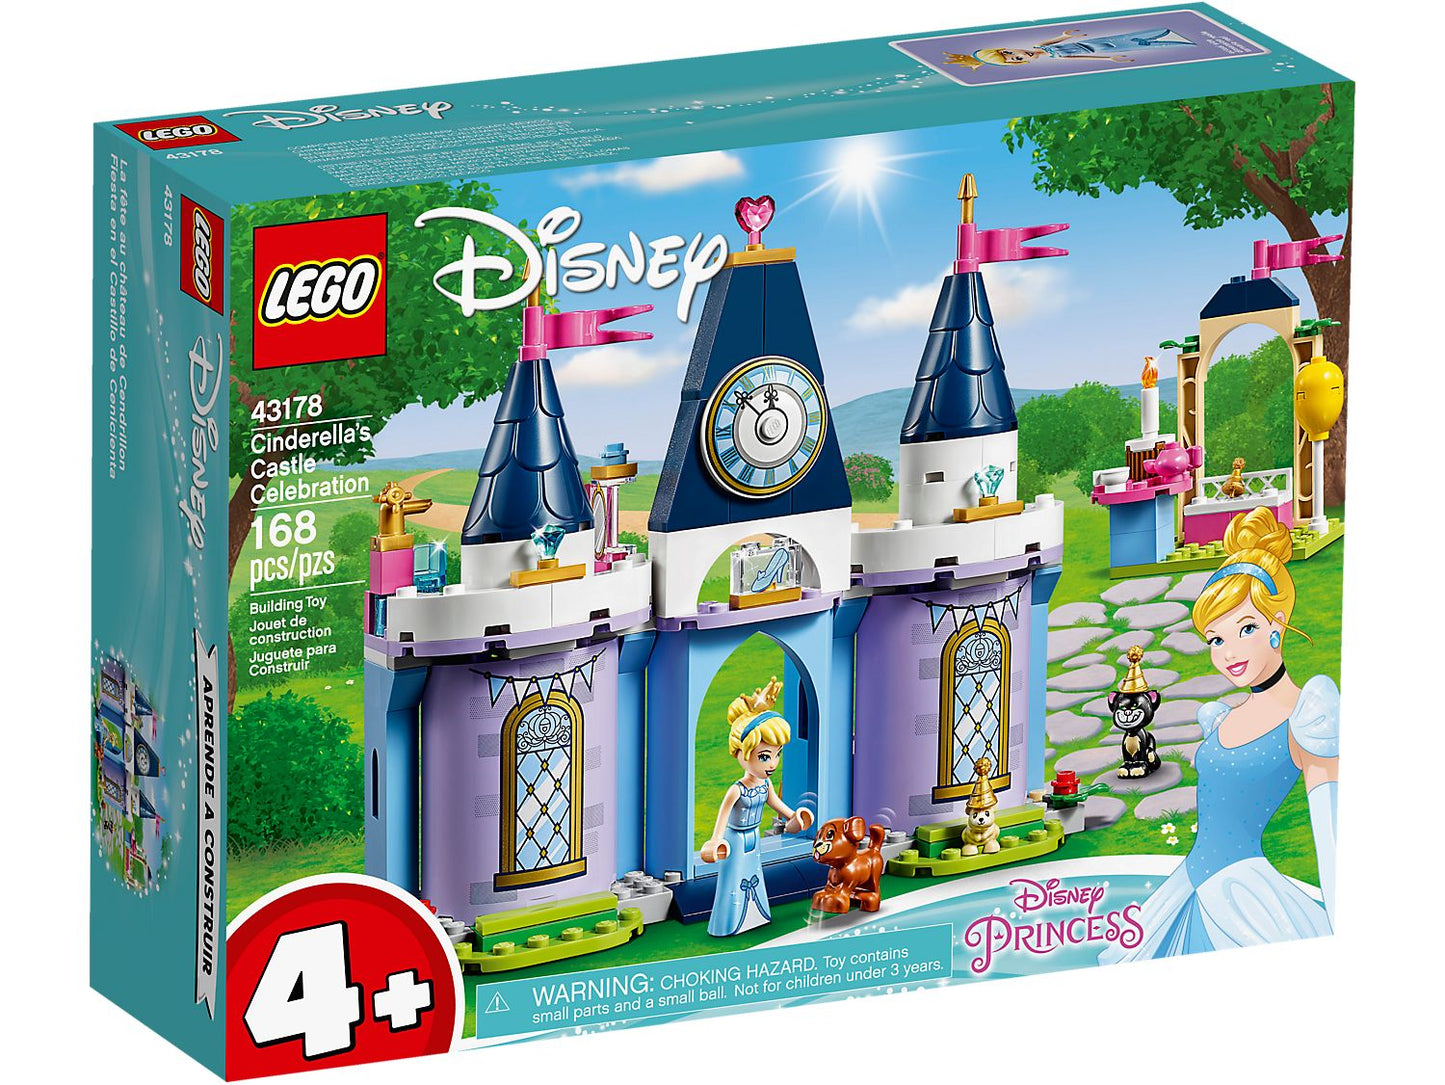 Lego Disney Princess Cinderella's Castle Celebration 43178